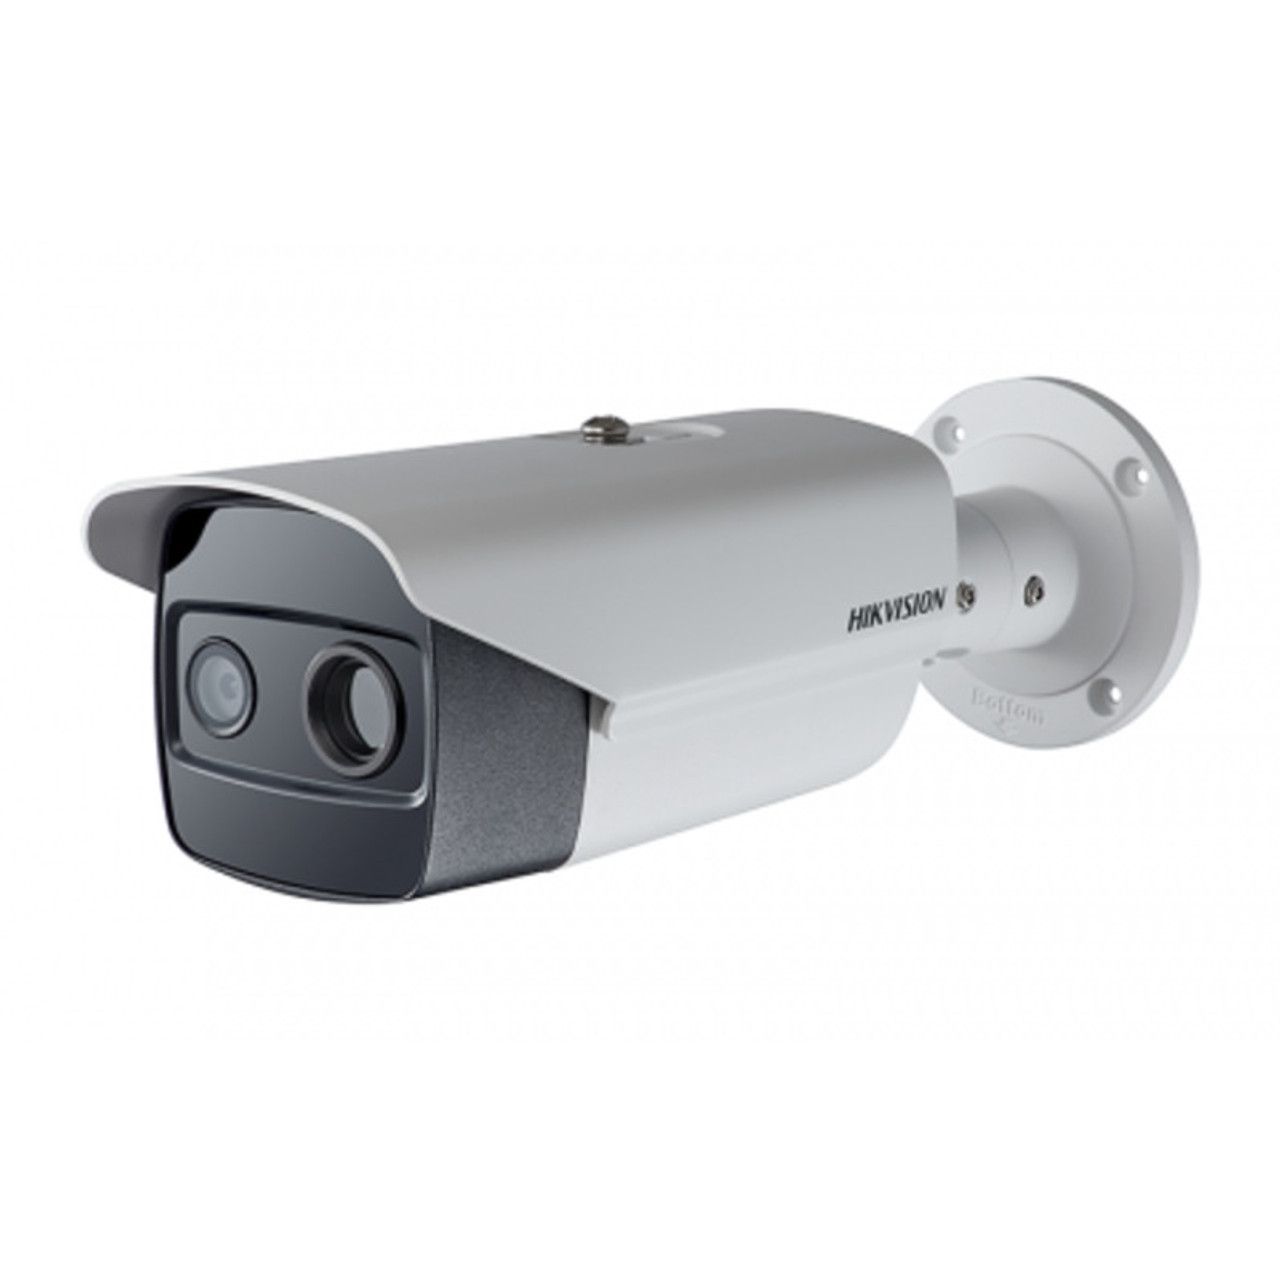 Hikvision Ds 2td2636 10 Thermal And Optical Bi Spectrum Bullet Ip Security Camera